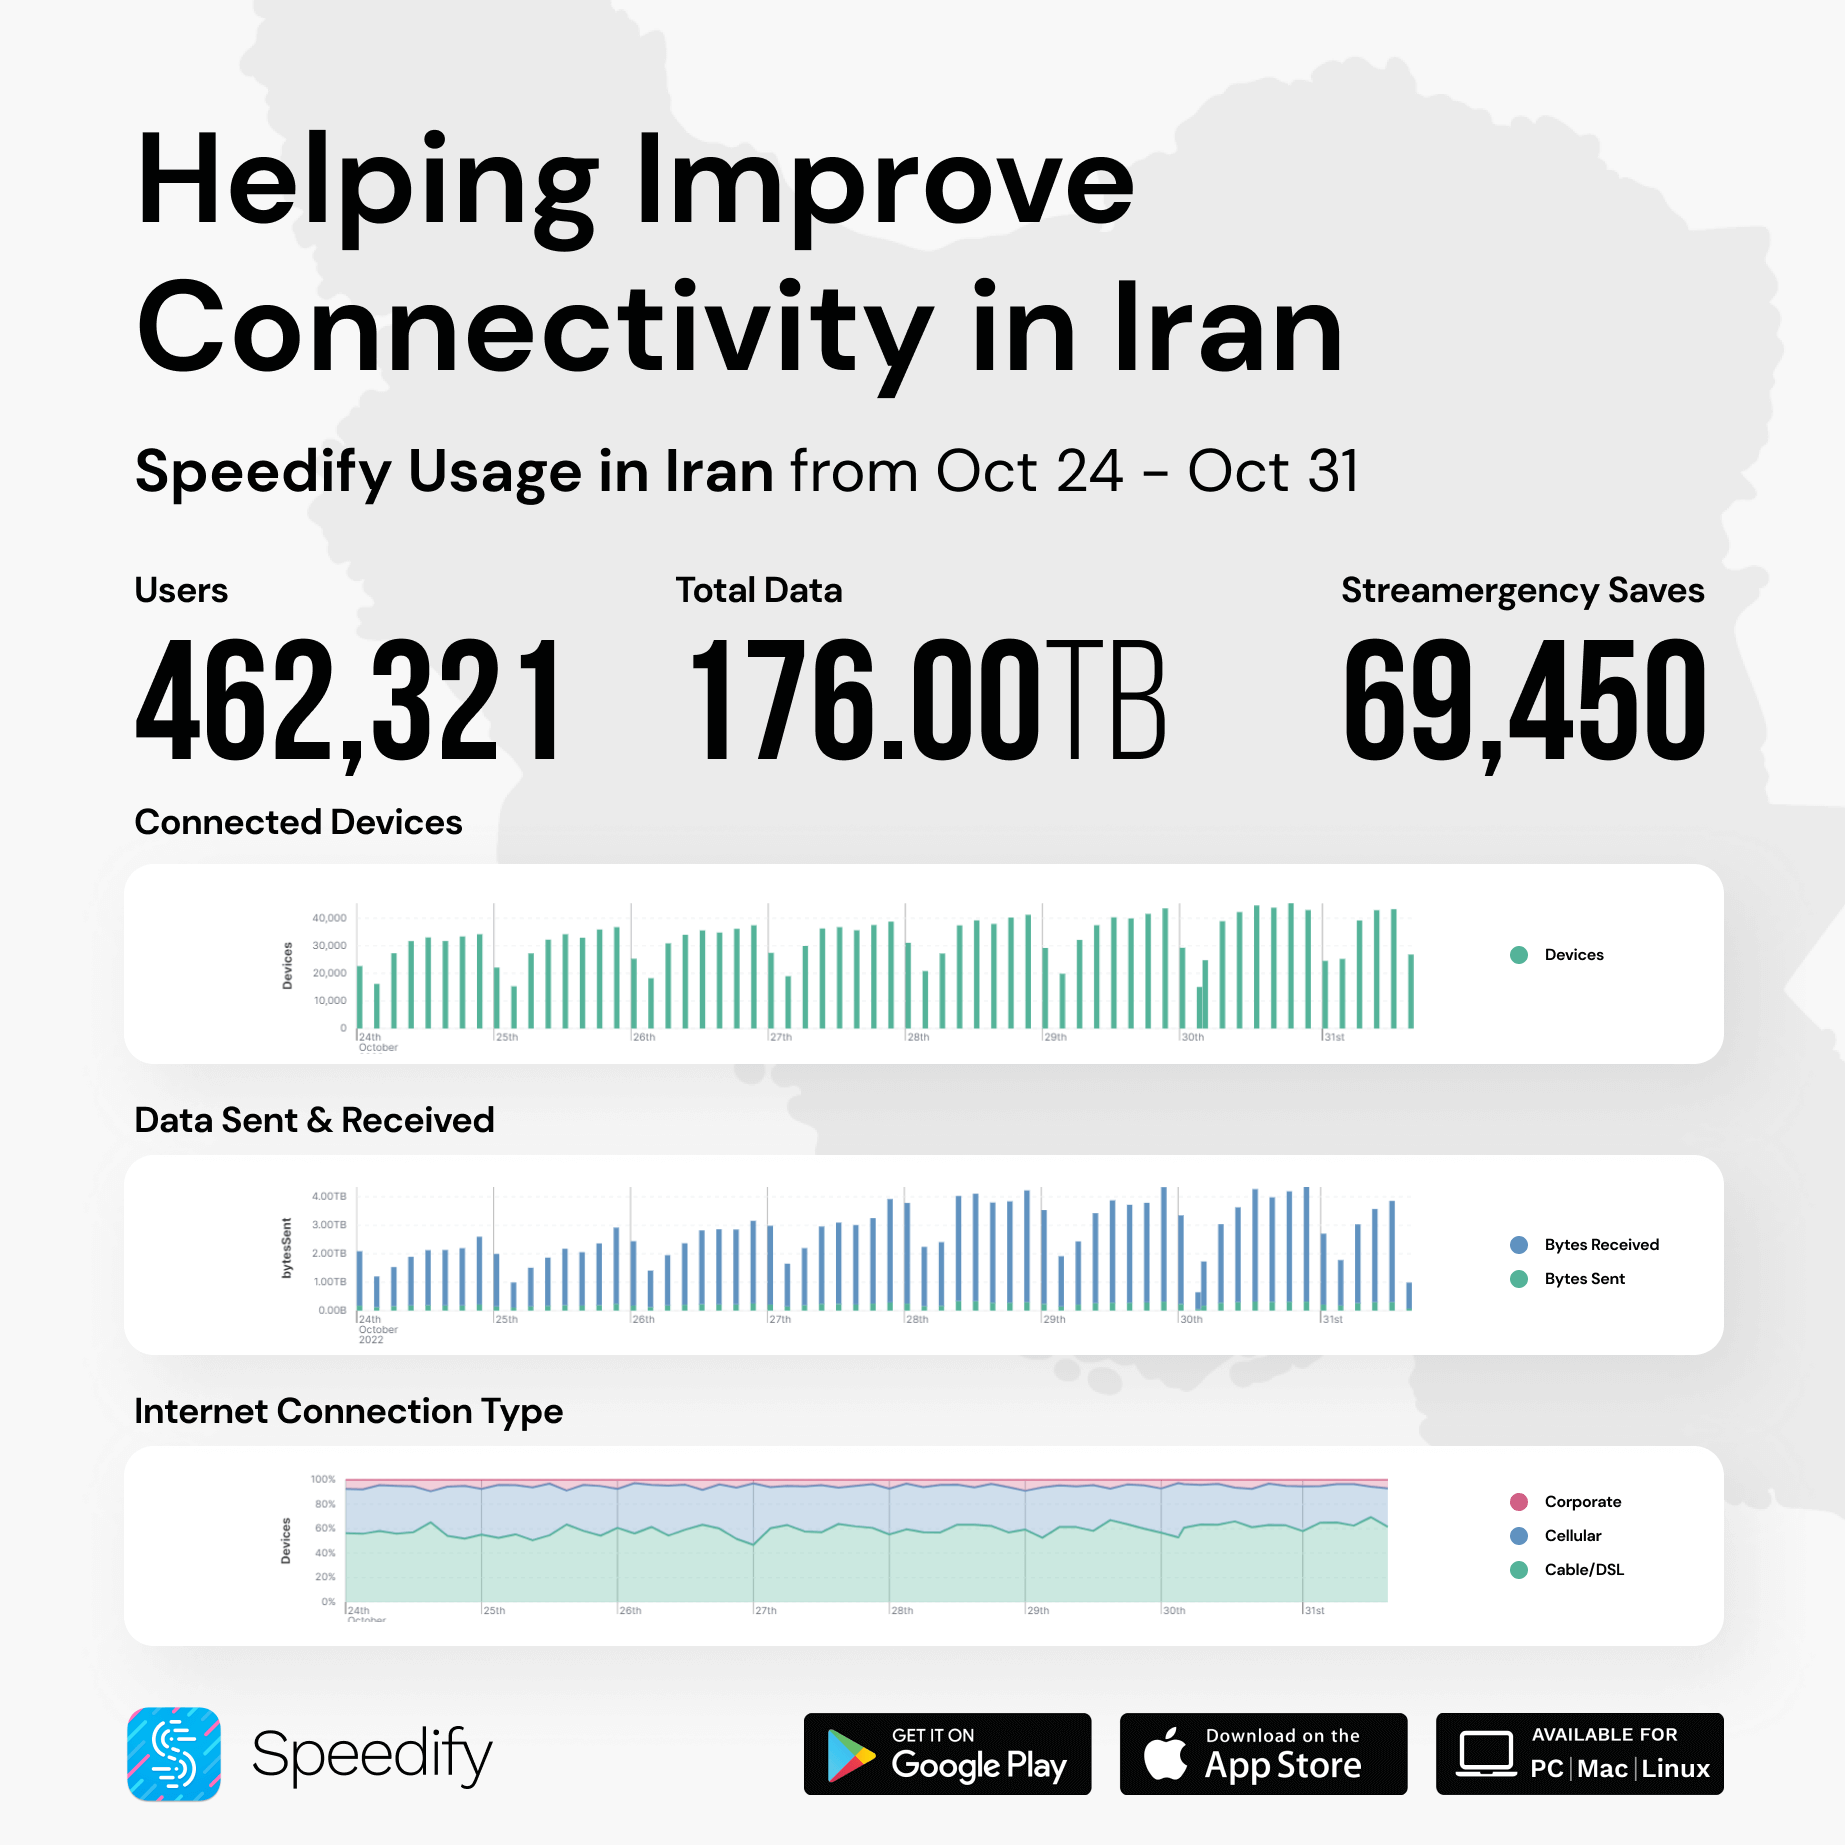 Oct 31 - Iran Internet usage for Speedify users